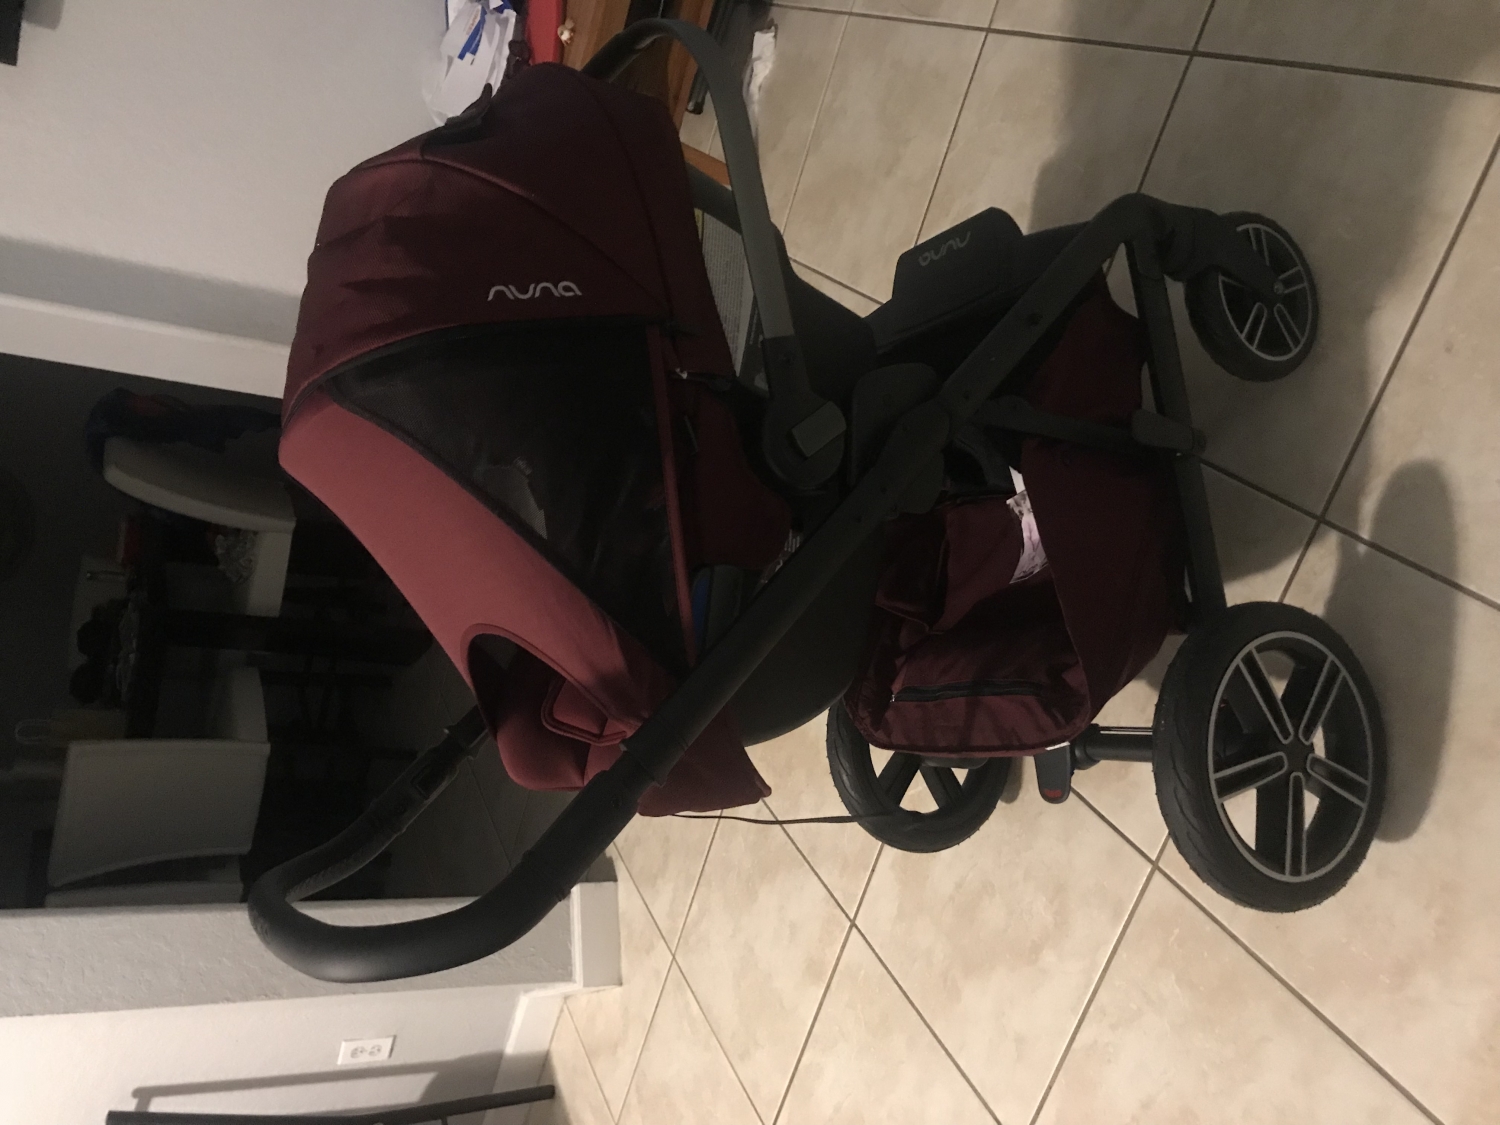 used nuna stroller